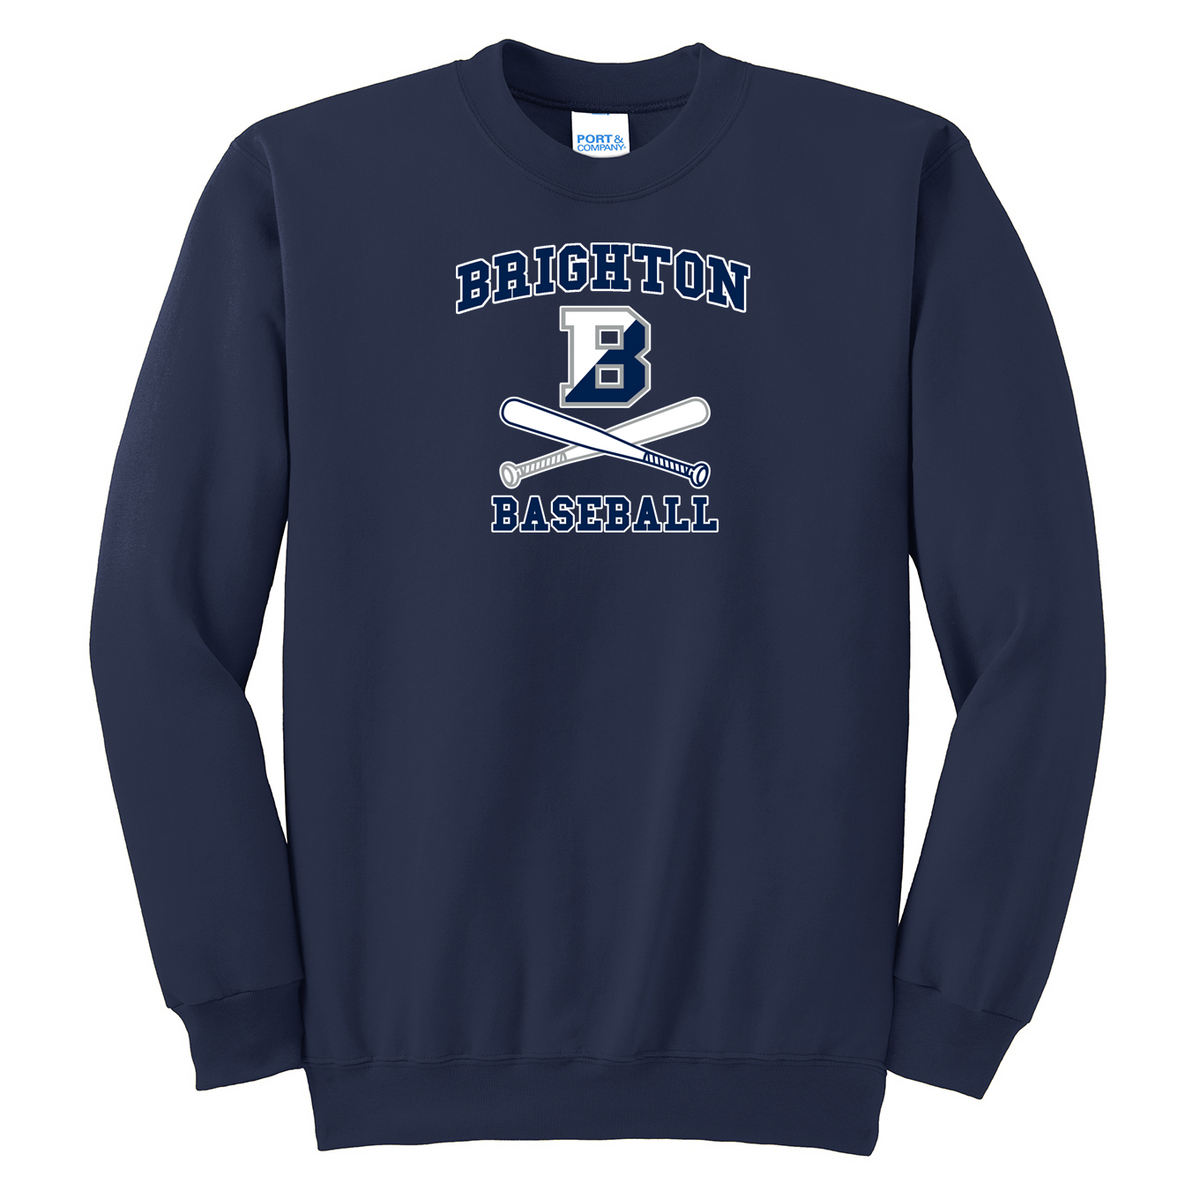 Brighton Baseball Crew Neck Sweater